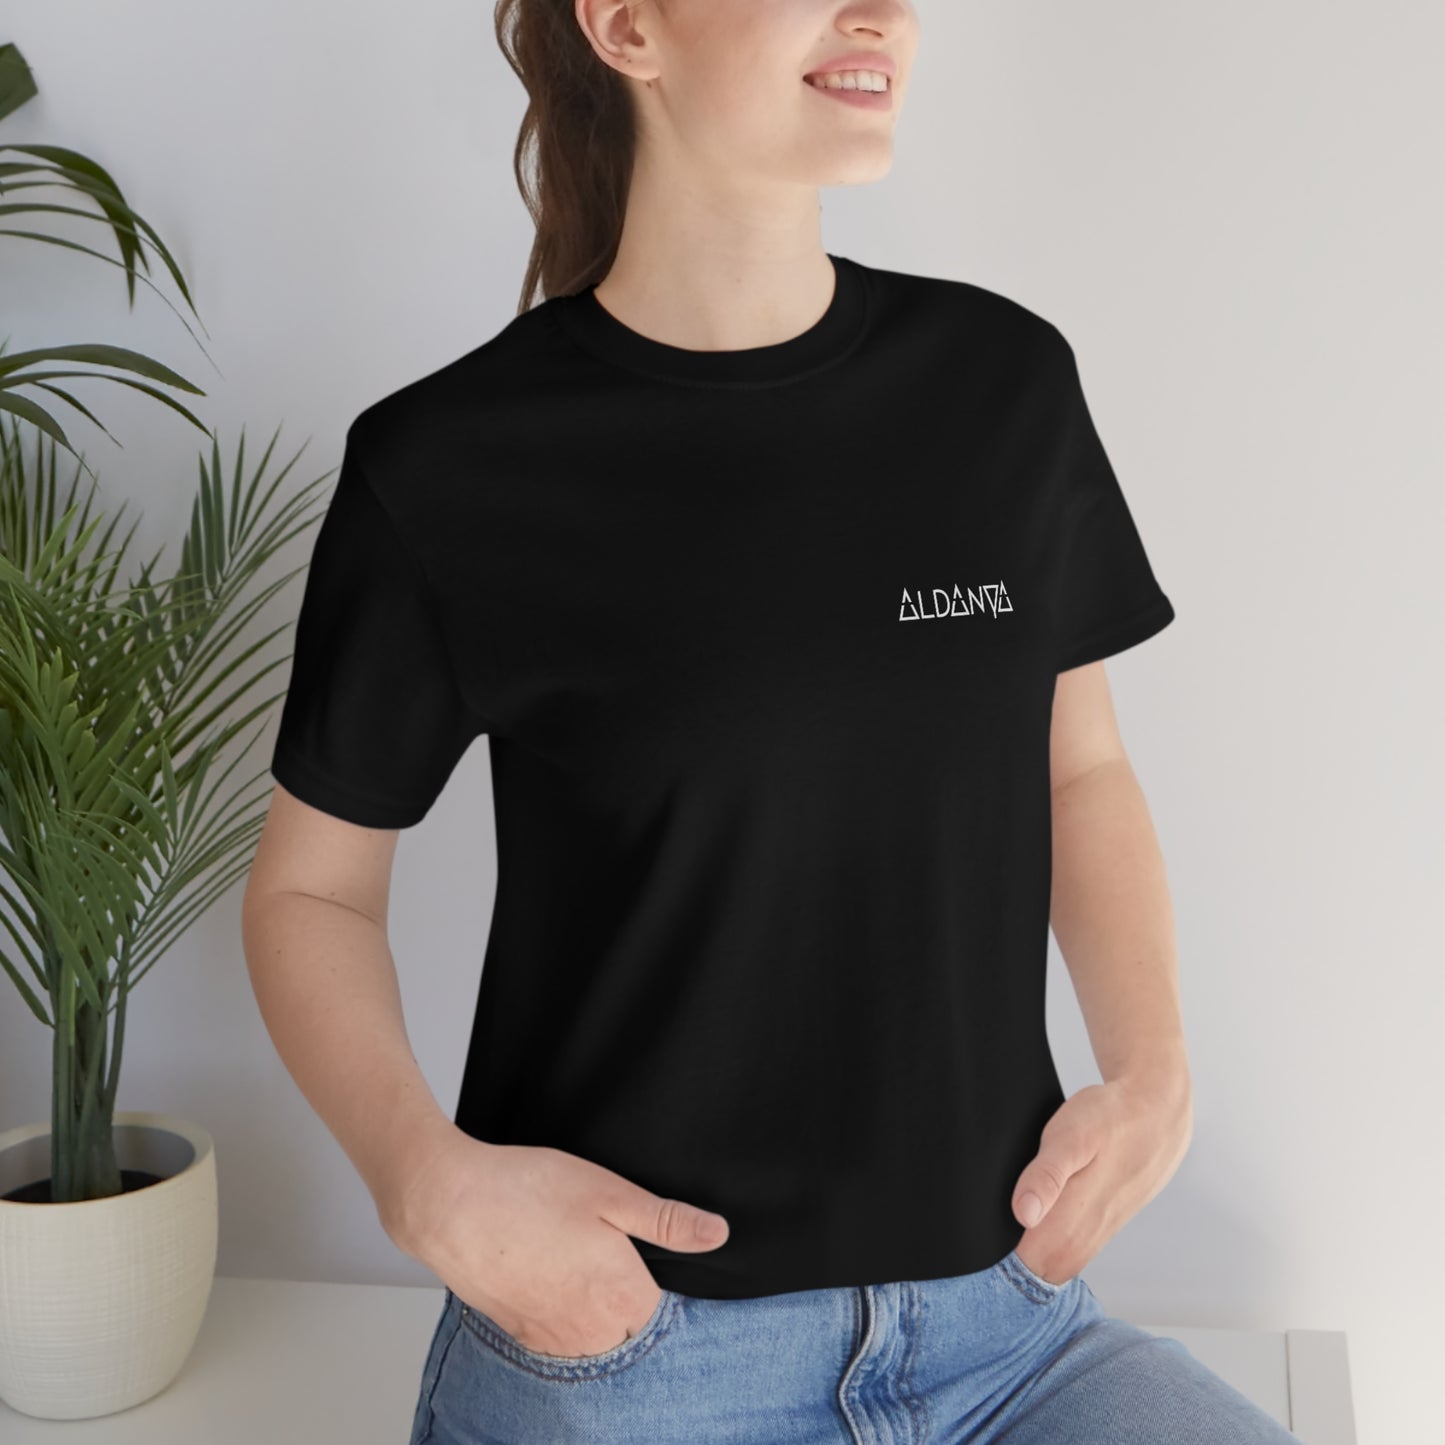 ALDANYA - Elevate your spirit / Listen to Techno | Unisex T-Shirt - Back Print